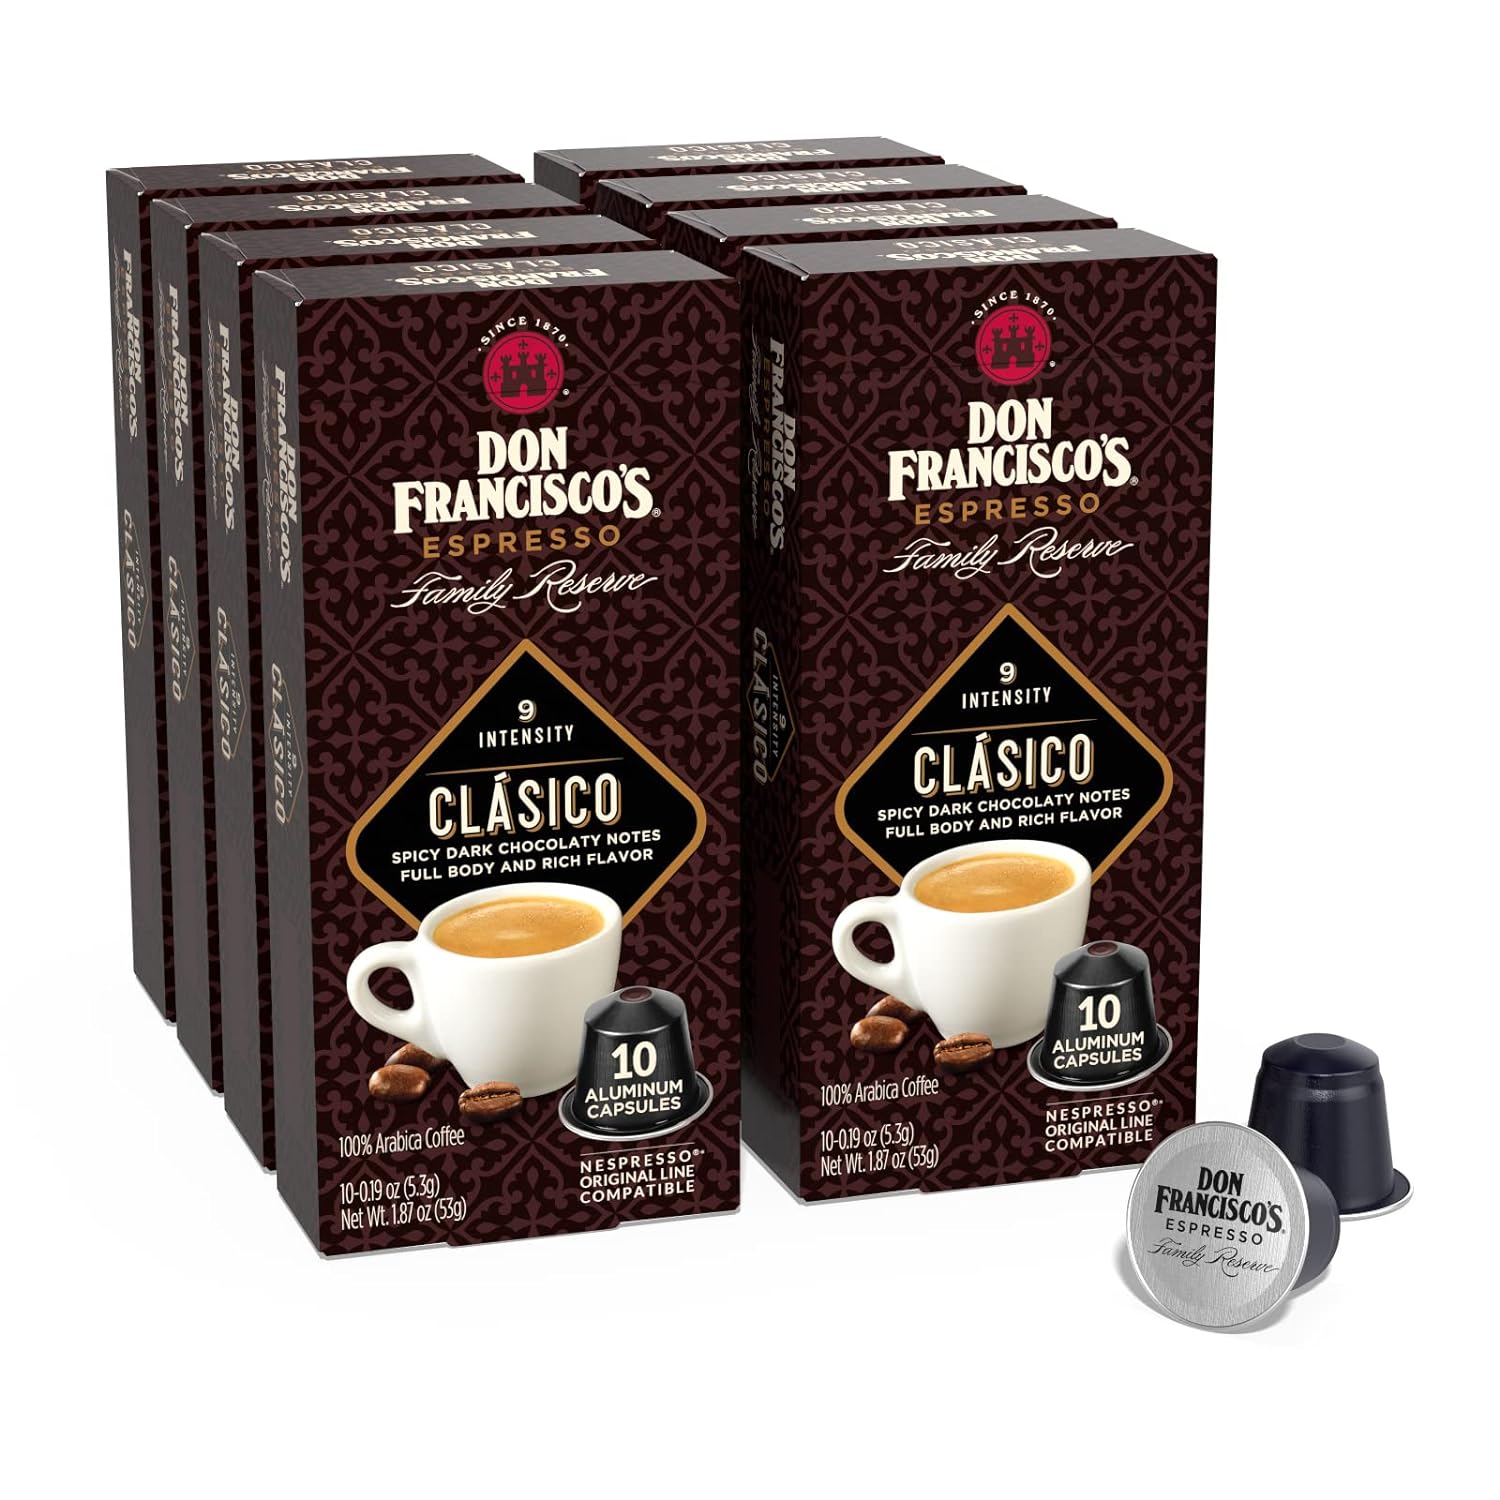 Don Francisco’s Clasico Espresso Capsules, 80-Count Aluminum Recyclable Pods, Intensity 9, Compatible with Original Nespresso Machines